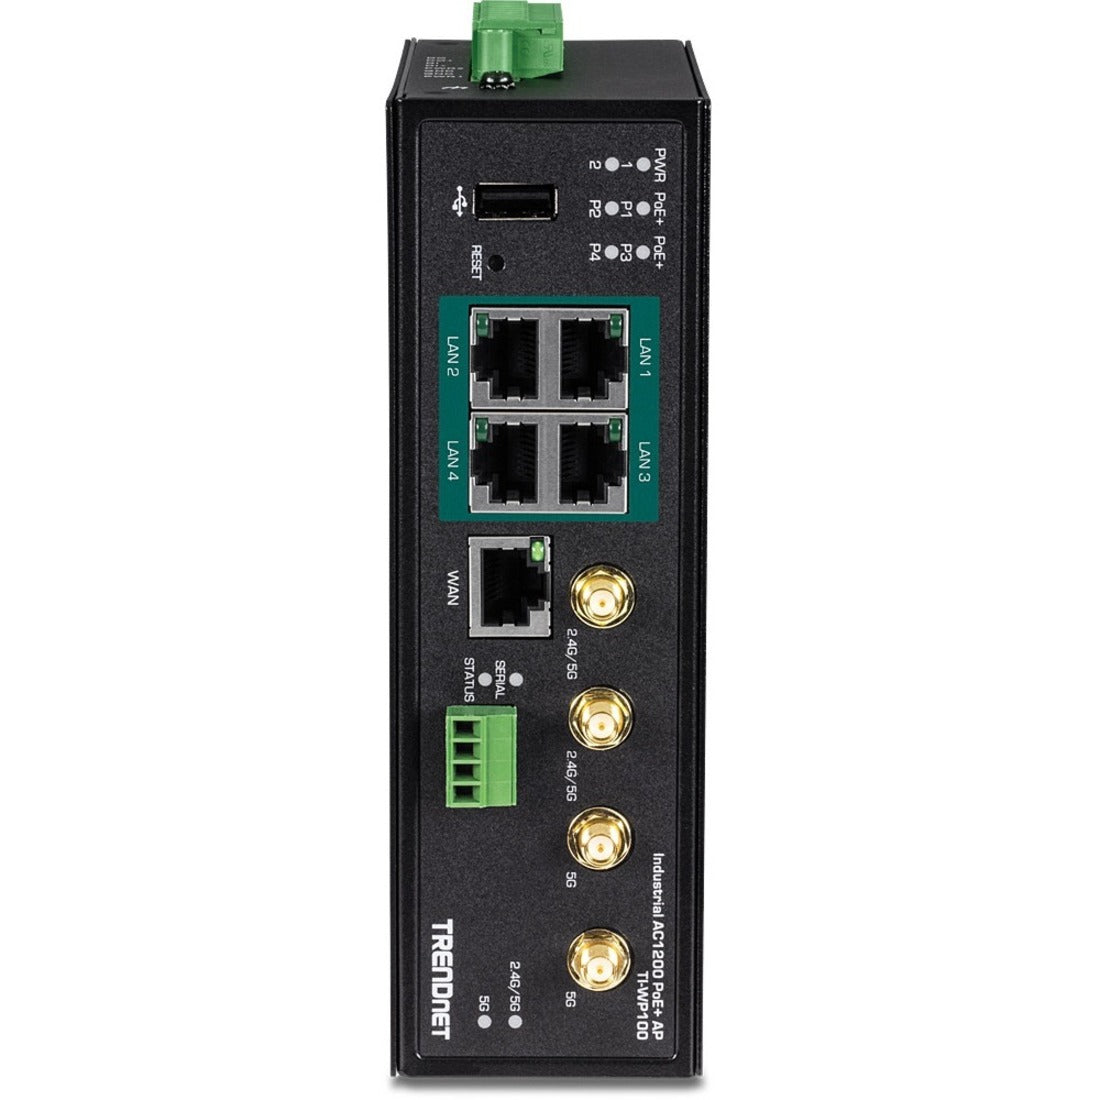 TRENDnet TI-WP100 Industrial AC1200 Wireless Gigabit PoE+ Router, TAA Compliant